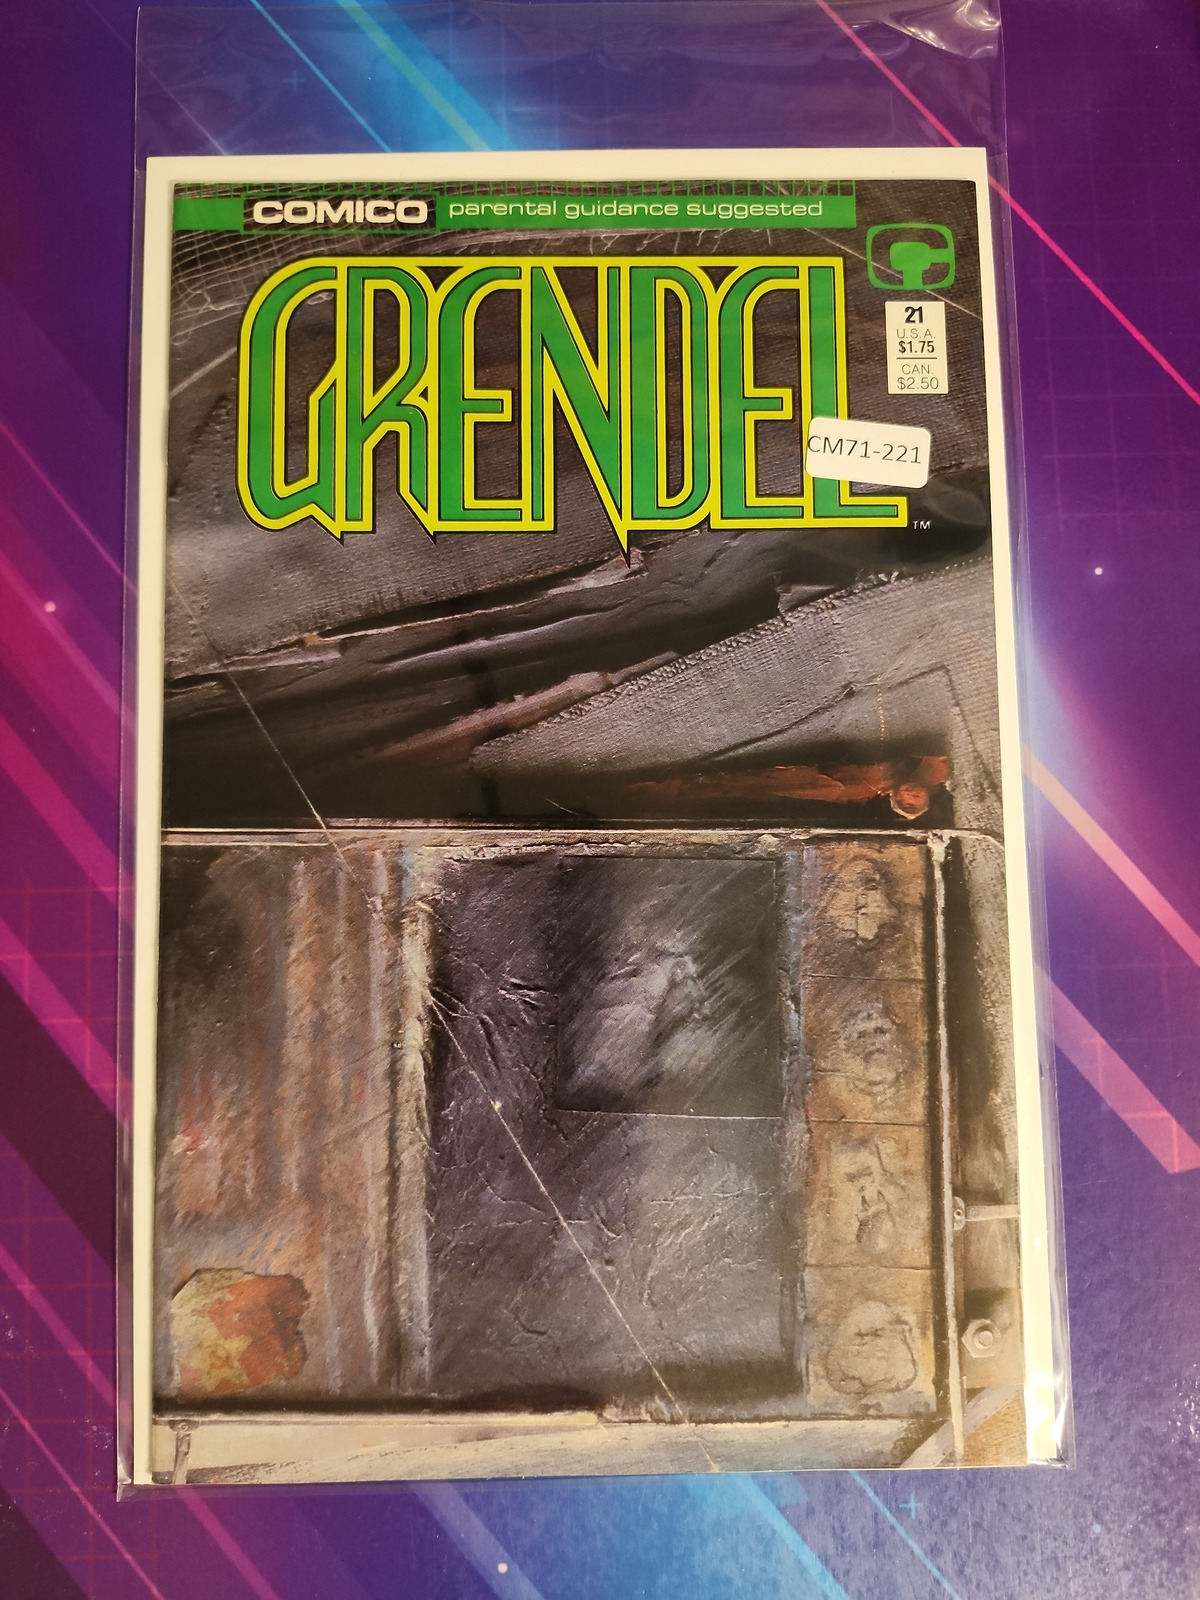 GRENDEL #21 VOL. 2 HIGH GRADE 1ST APP COMICO COMIC BOOK CM71-221